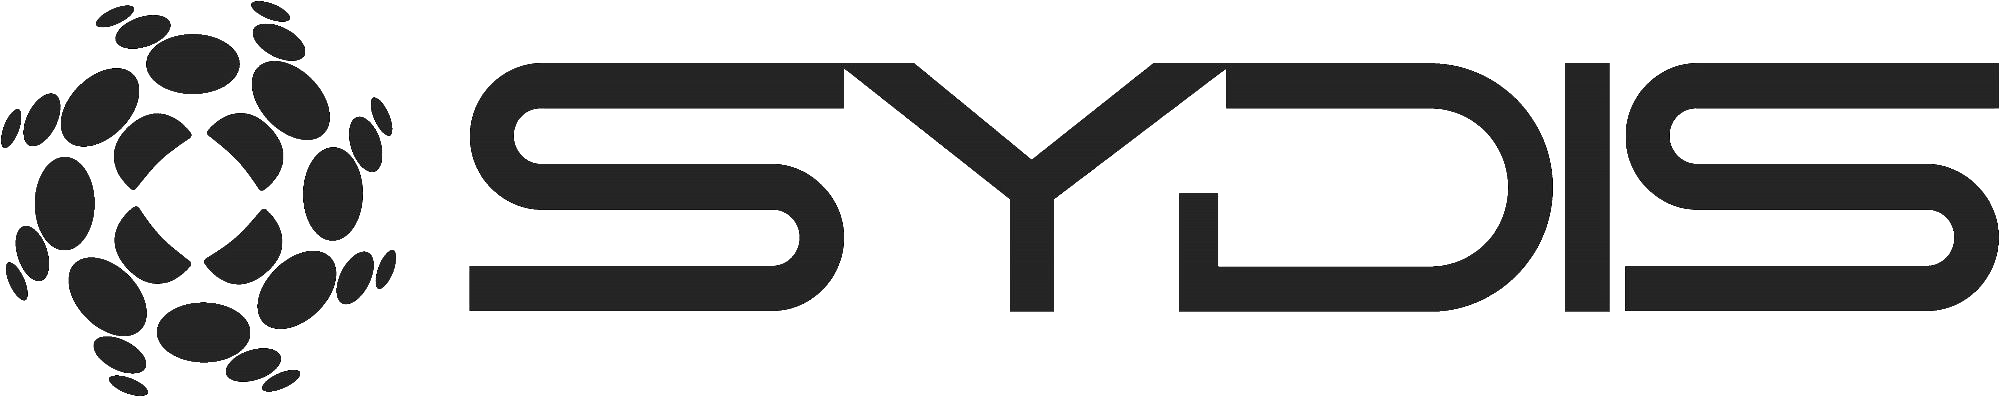 sydis logo web